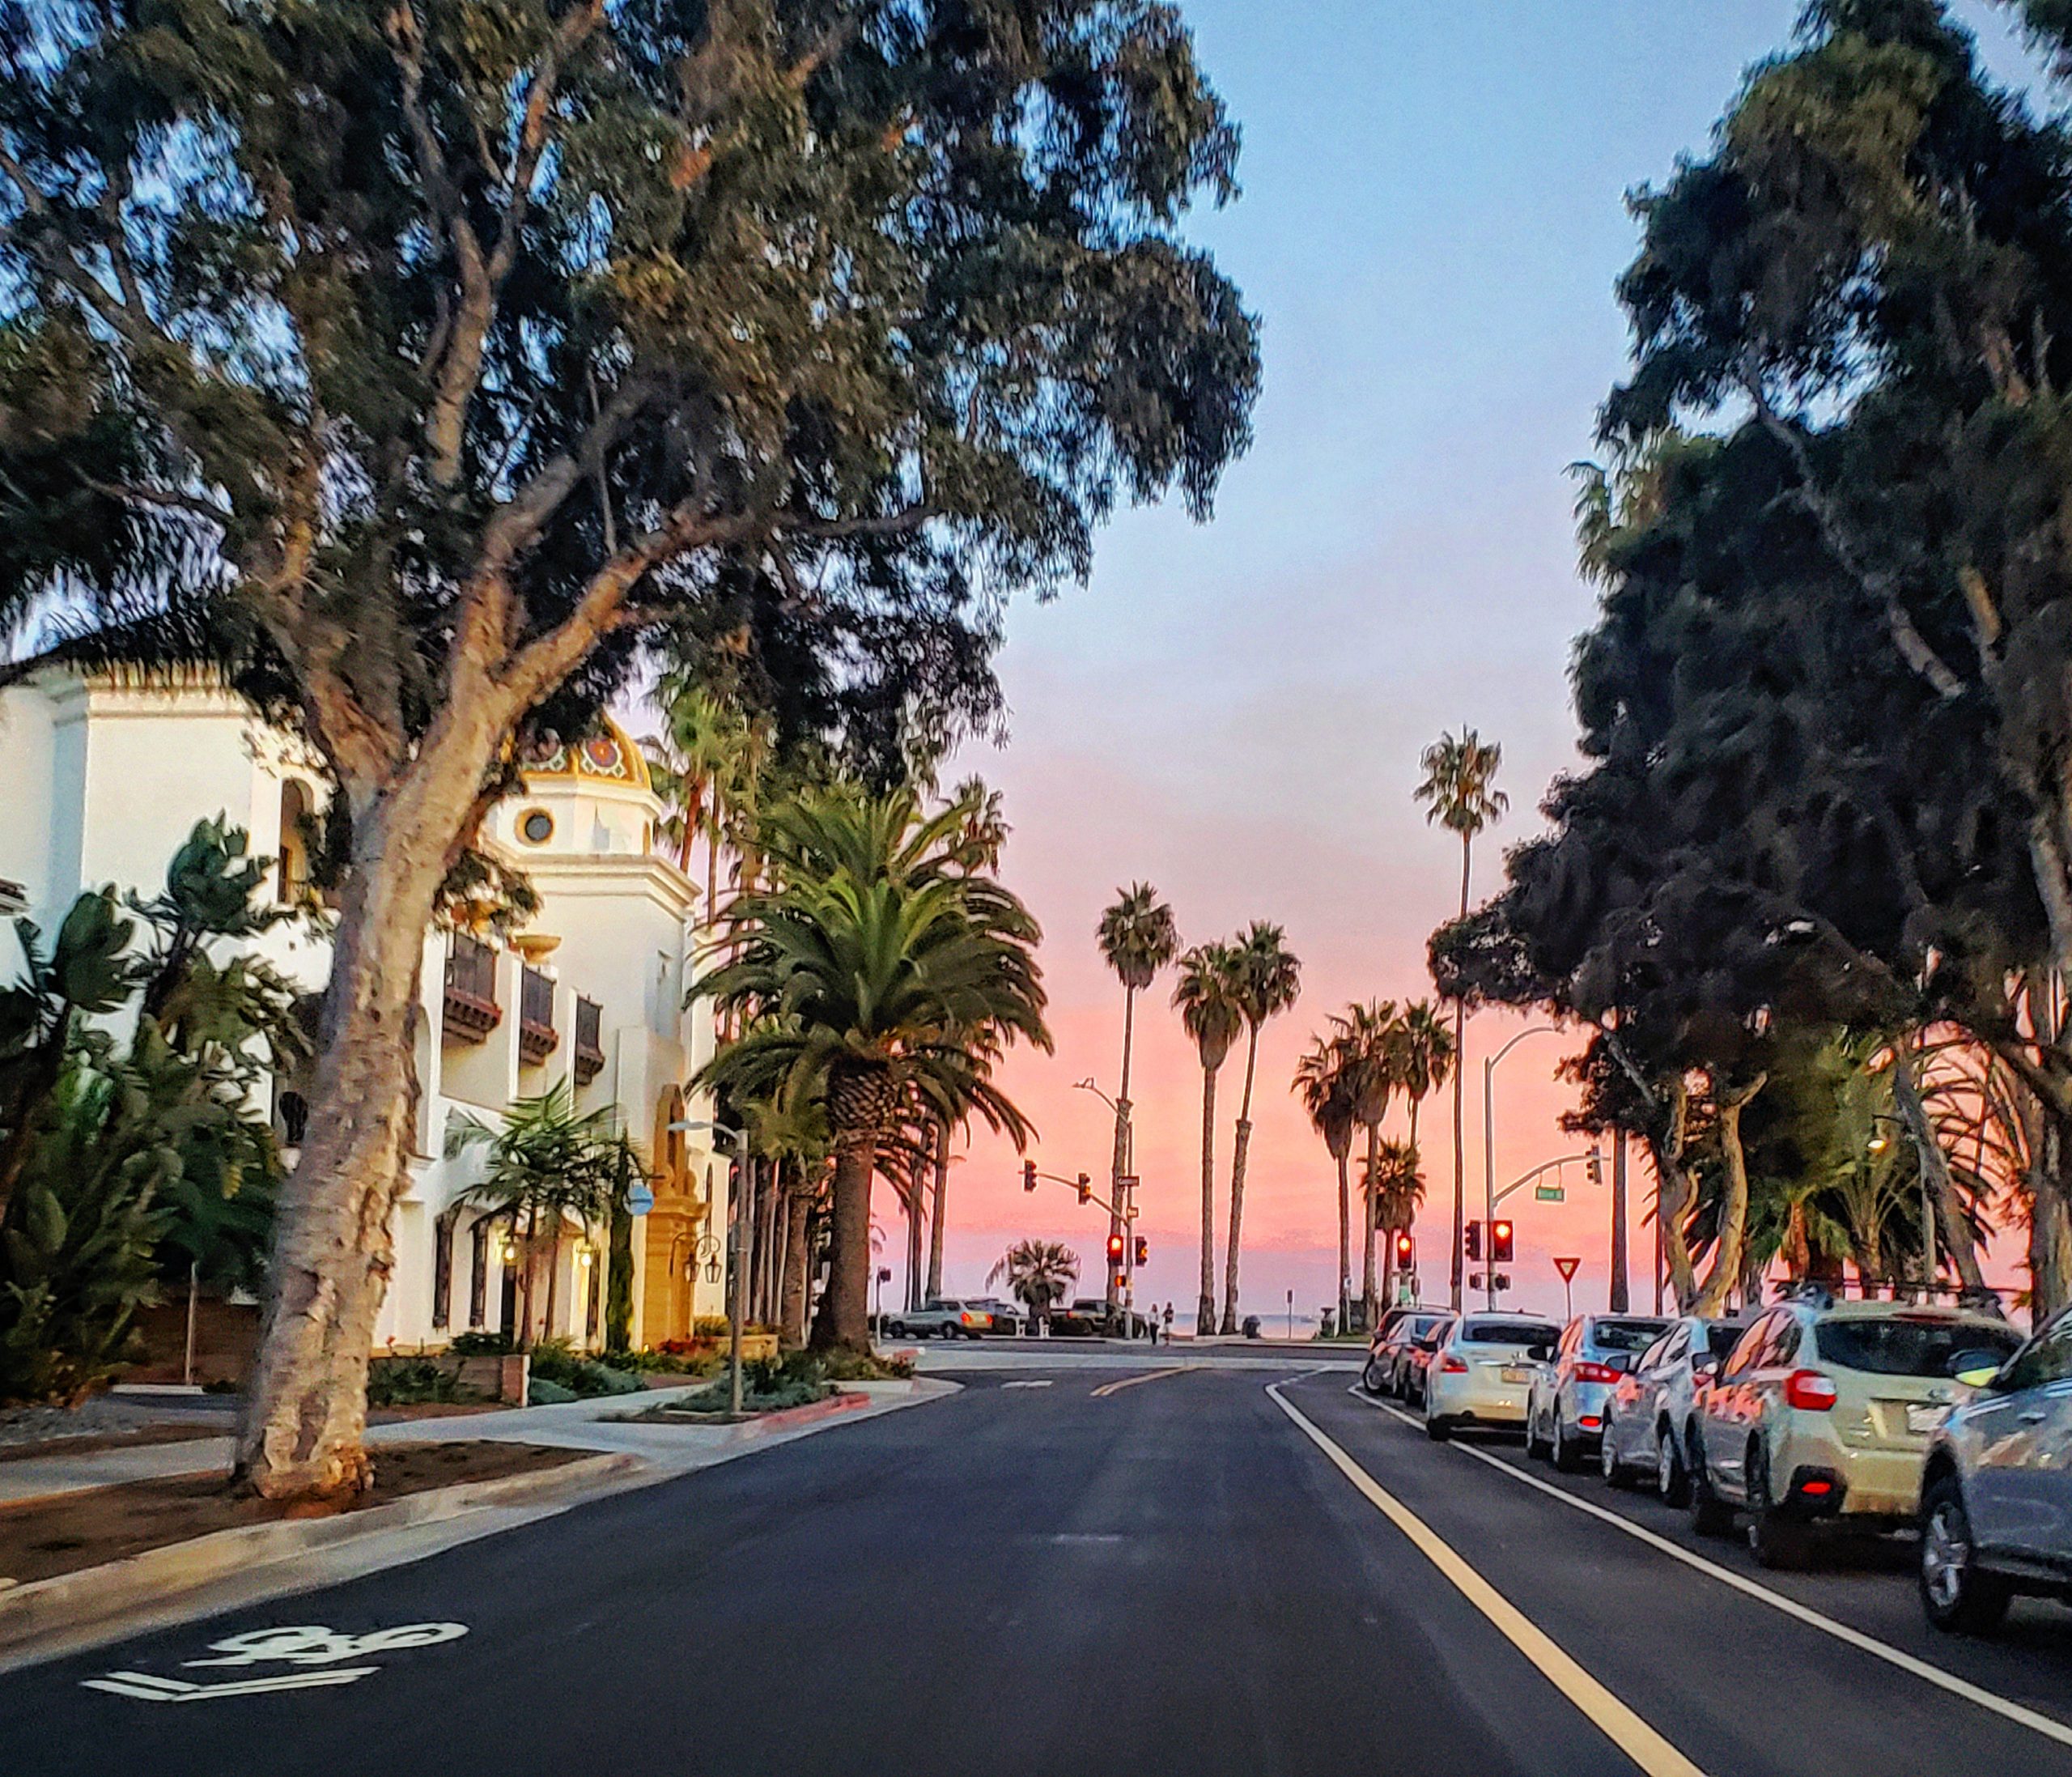 2 Days In Santa Barbara: A Perfect 48-Hour Itinerary